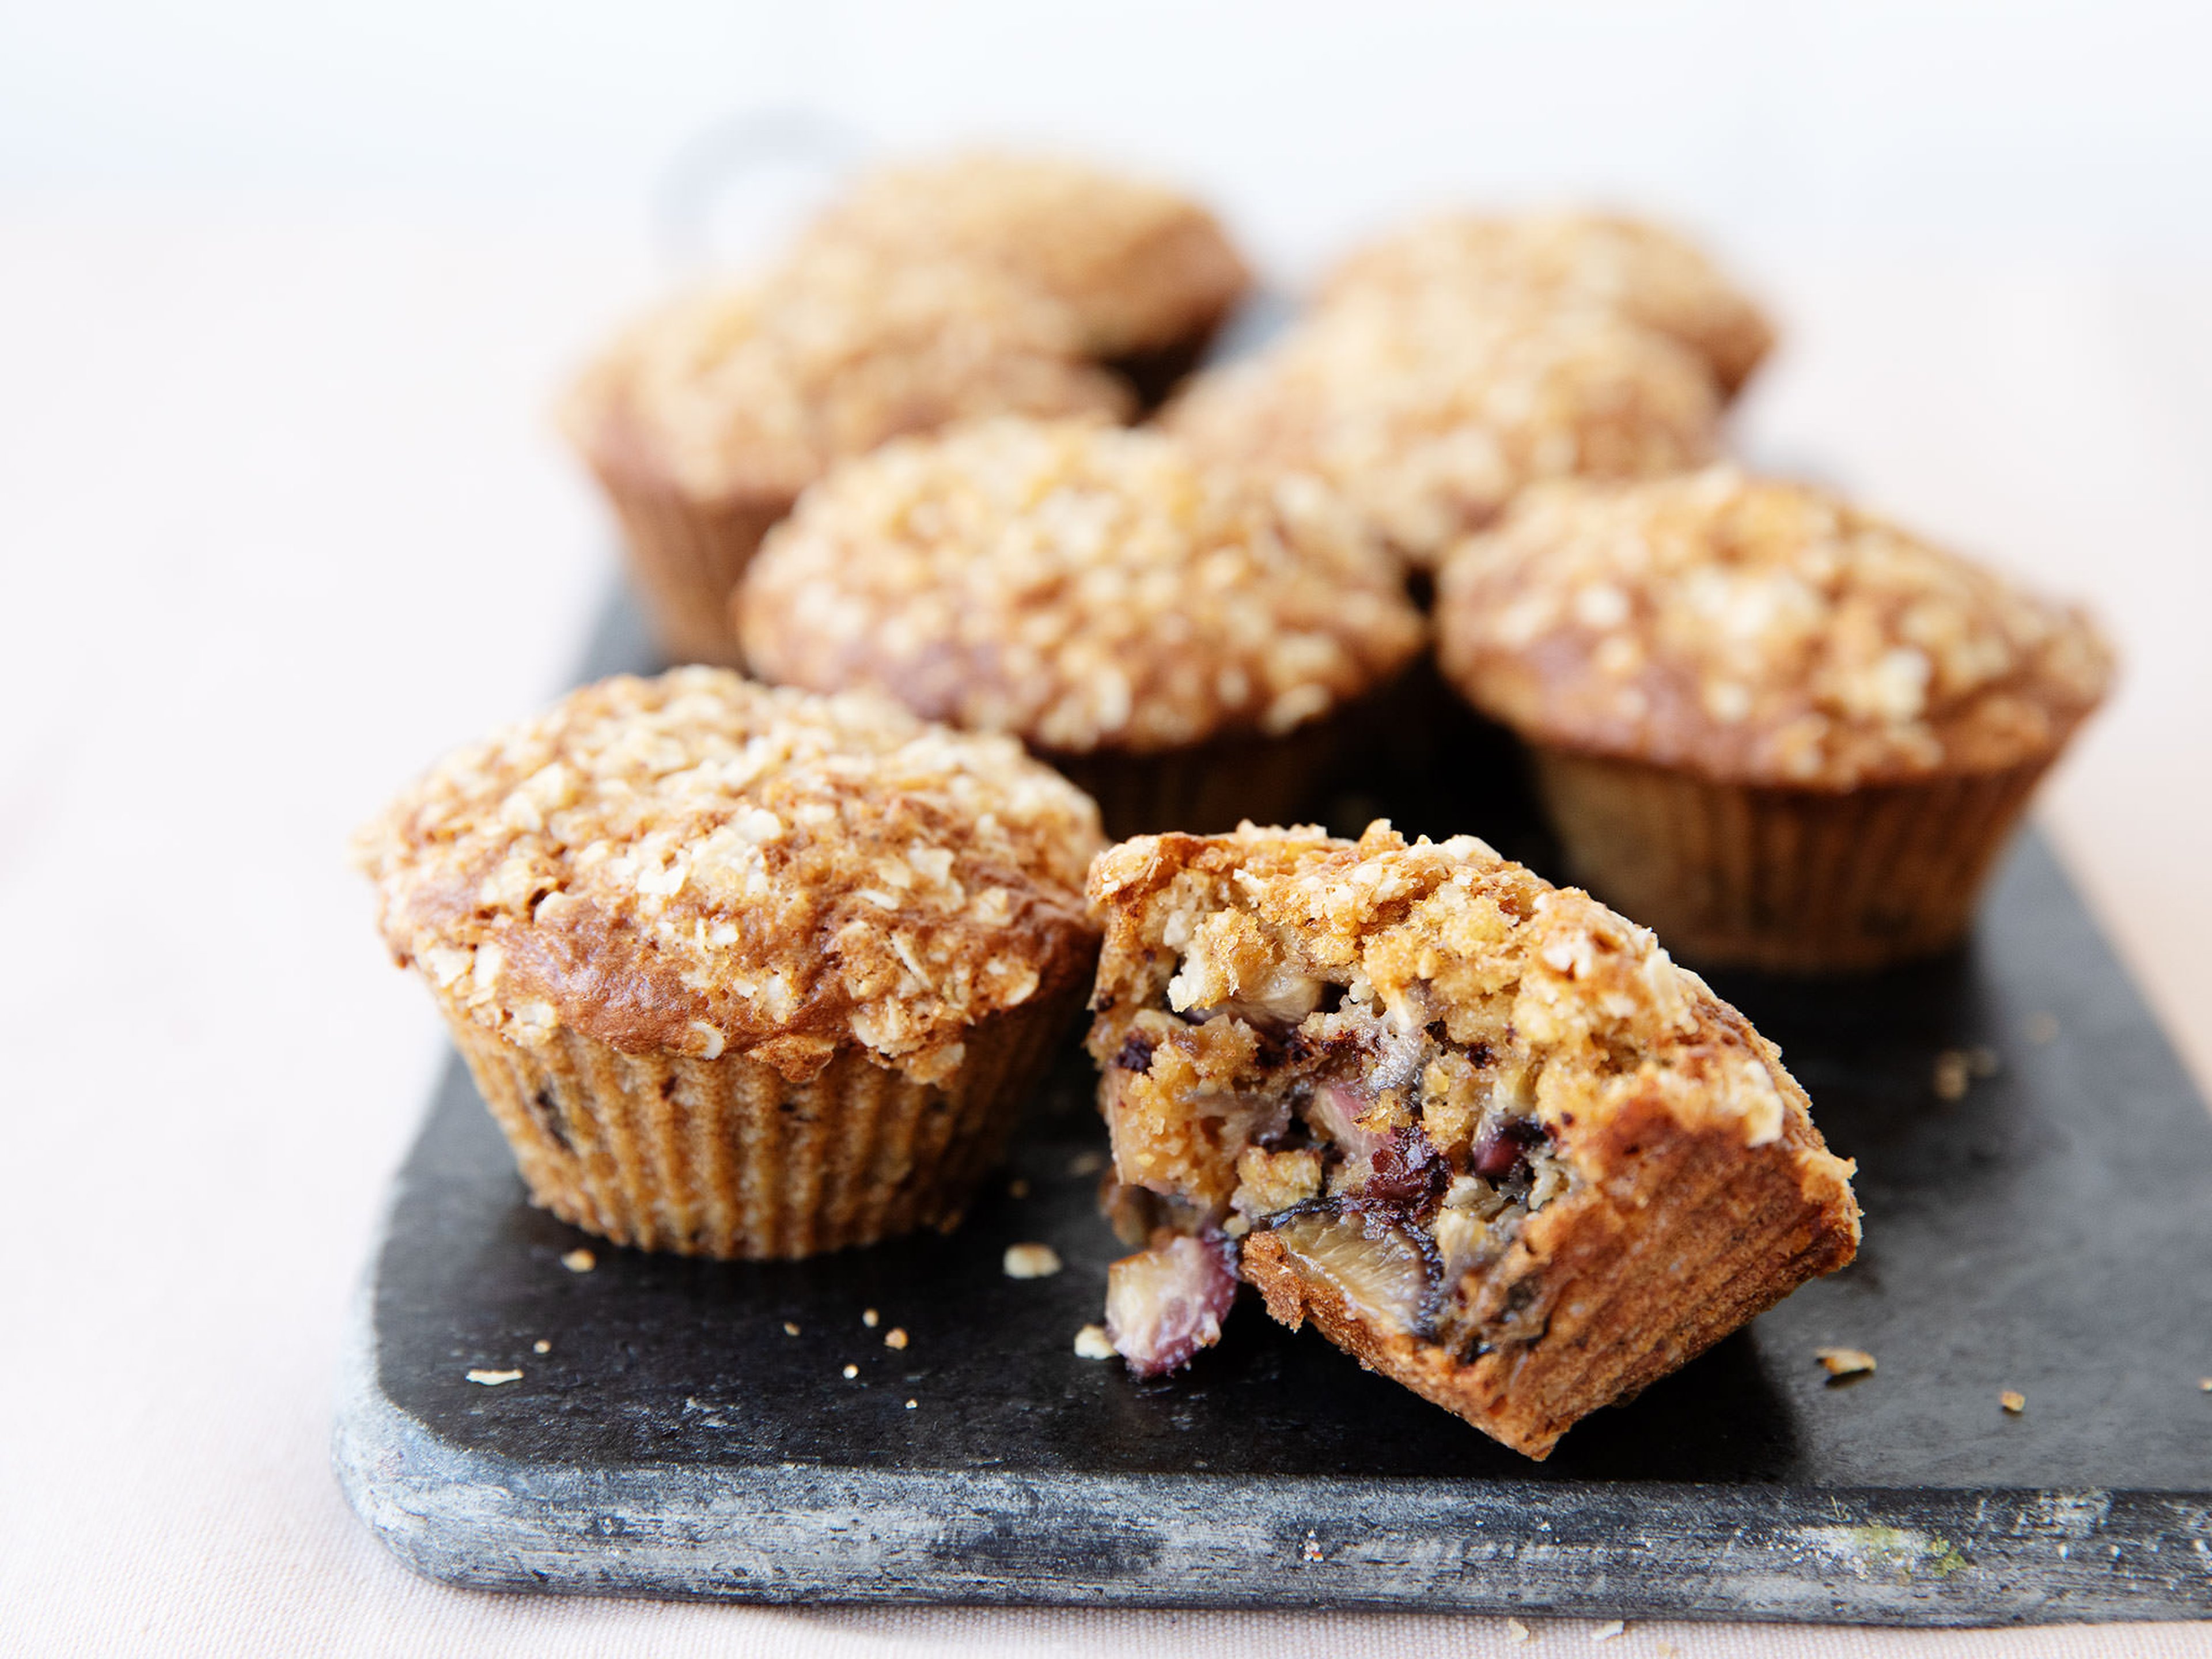 Chocolate-cherry-oat muffins